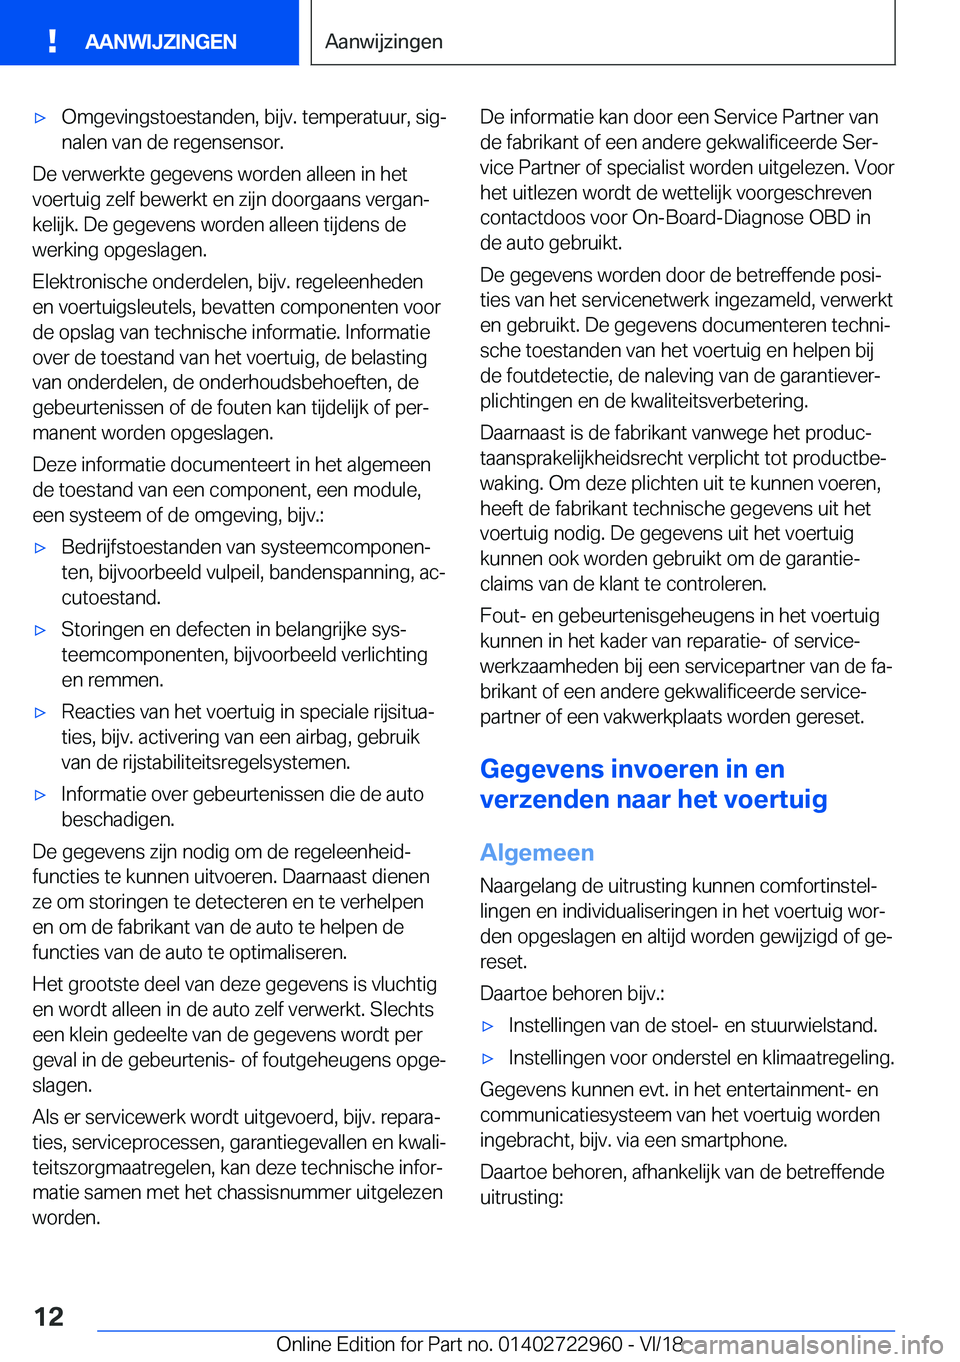 BMW M4 2019  Instructieboekjes (in Dutch) 'x�O�m�g�e�v�i�n�g�s�t�o�e�s�t�a�n�d�e�n�,��b�i�j�v�.��t�e�m�p�e�r�a�t�u�u�r�,��s�i�gj�n�a�l�e�n��v�a�n��d�e��r�e�g�e�n�s�e�n�s�o�r�.
�D�e��v�e�r�w�e�r�k�t�e��g�e�g�e�v�e�n�s��w�o�r�d�e�